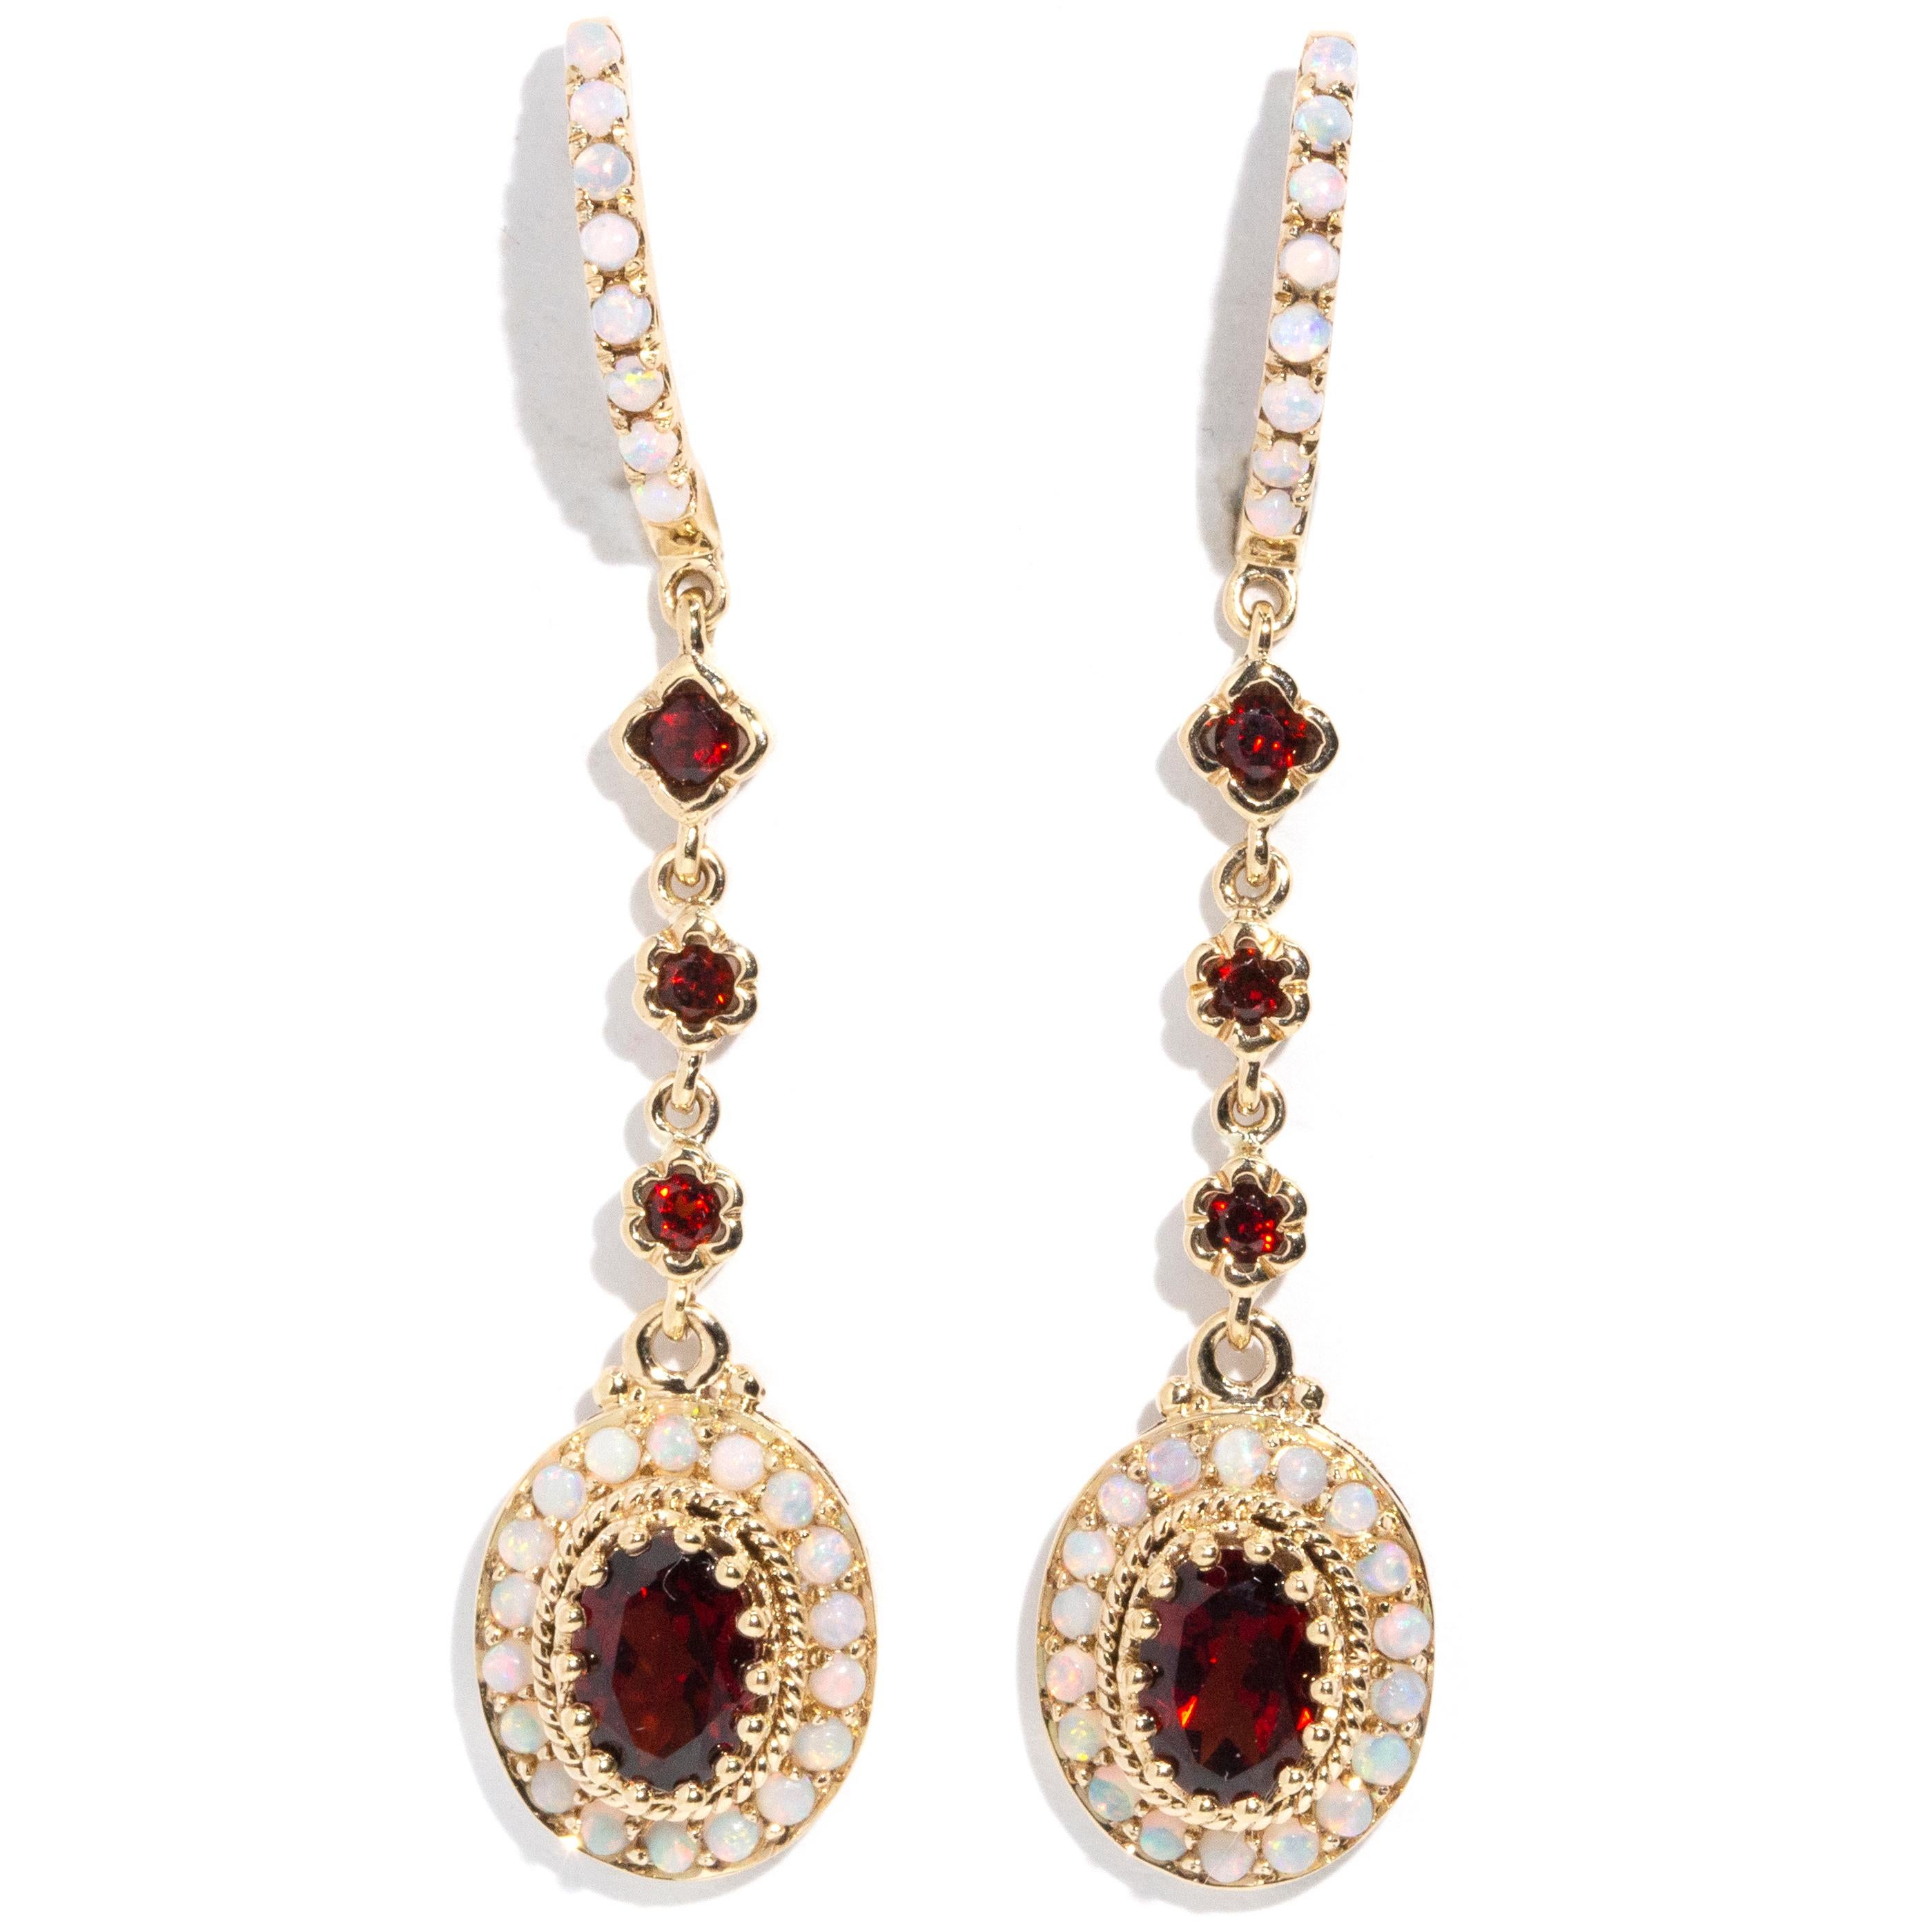 Contemporary Vintage Inspired Australian Opal & Deep Red Garnet Drop Earrings 9 Carat Gold For Sale